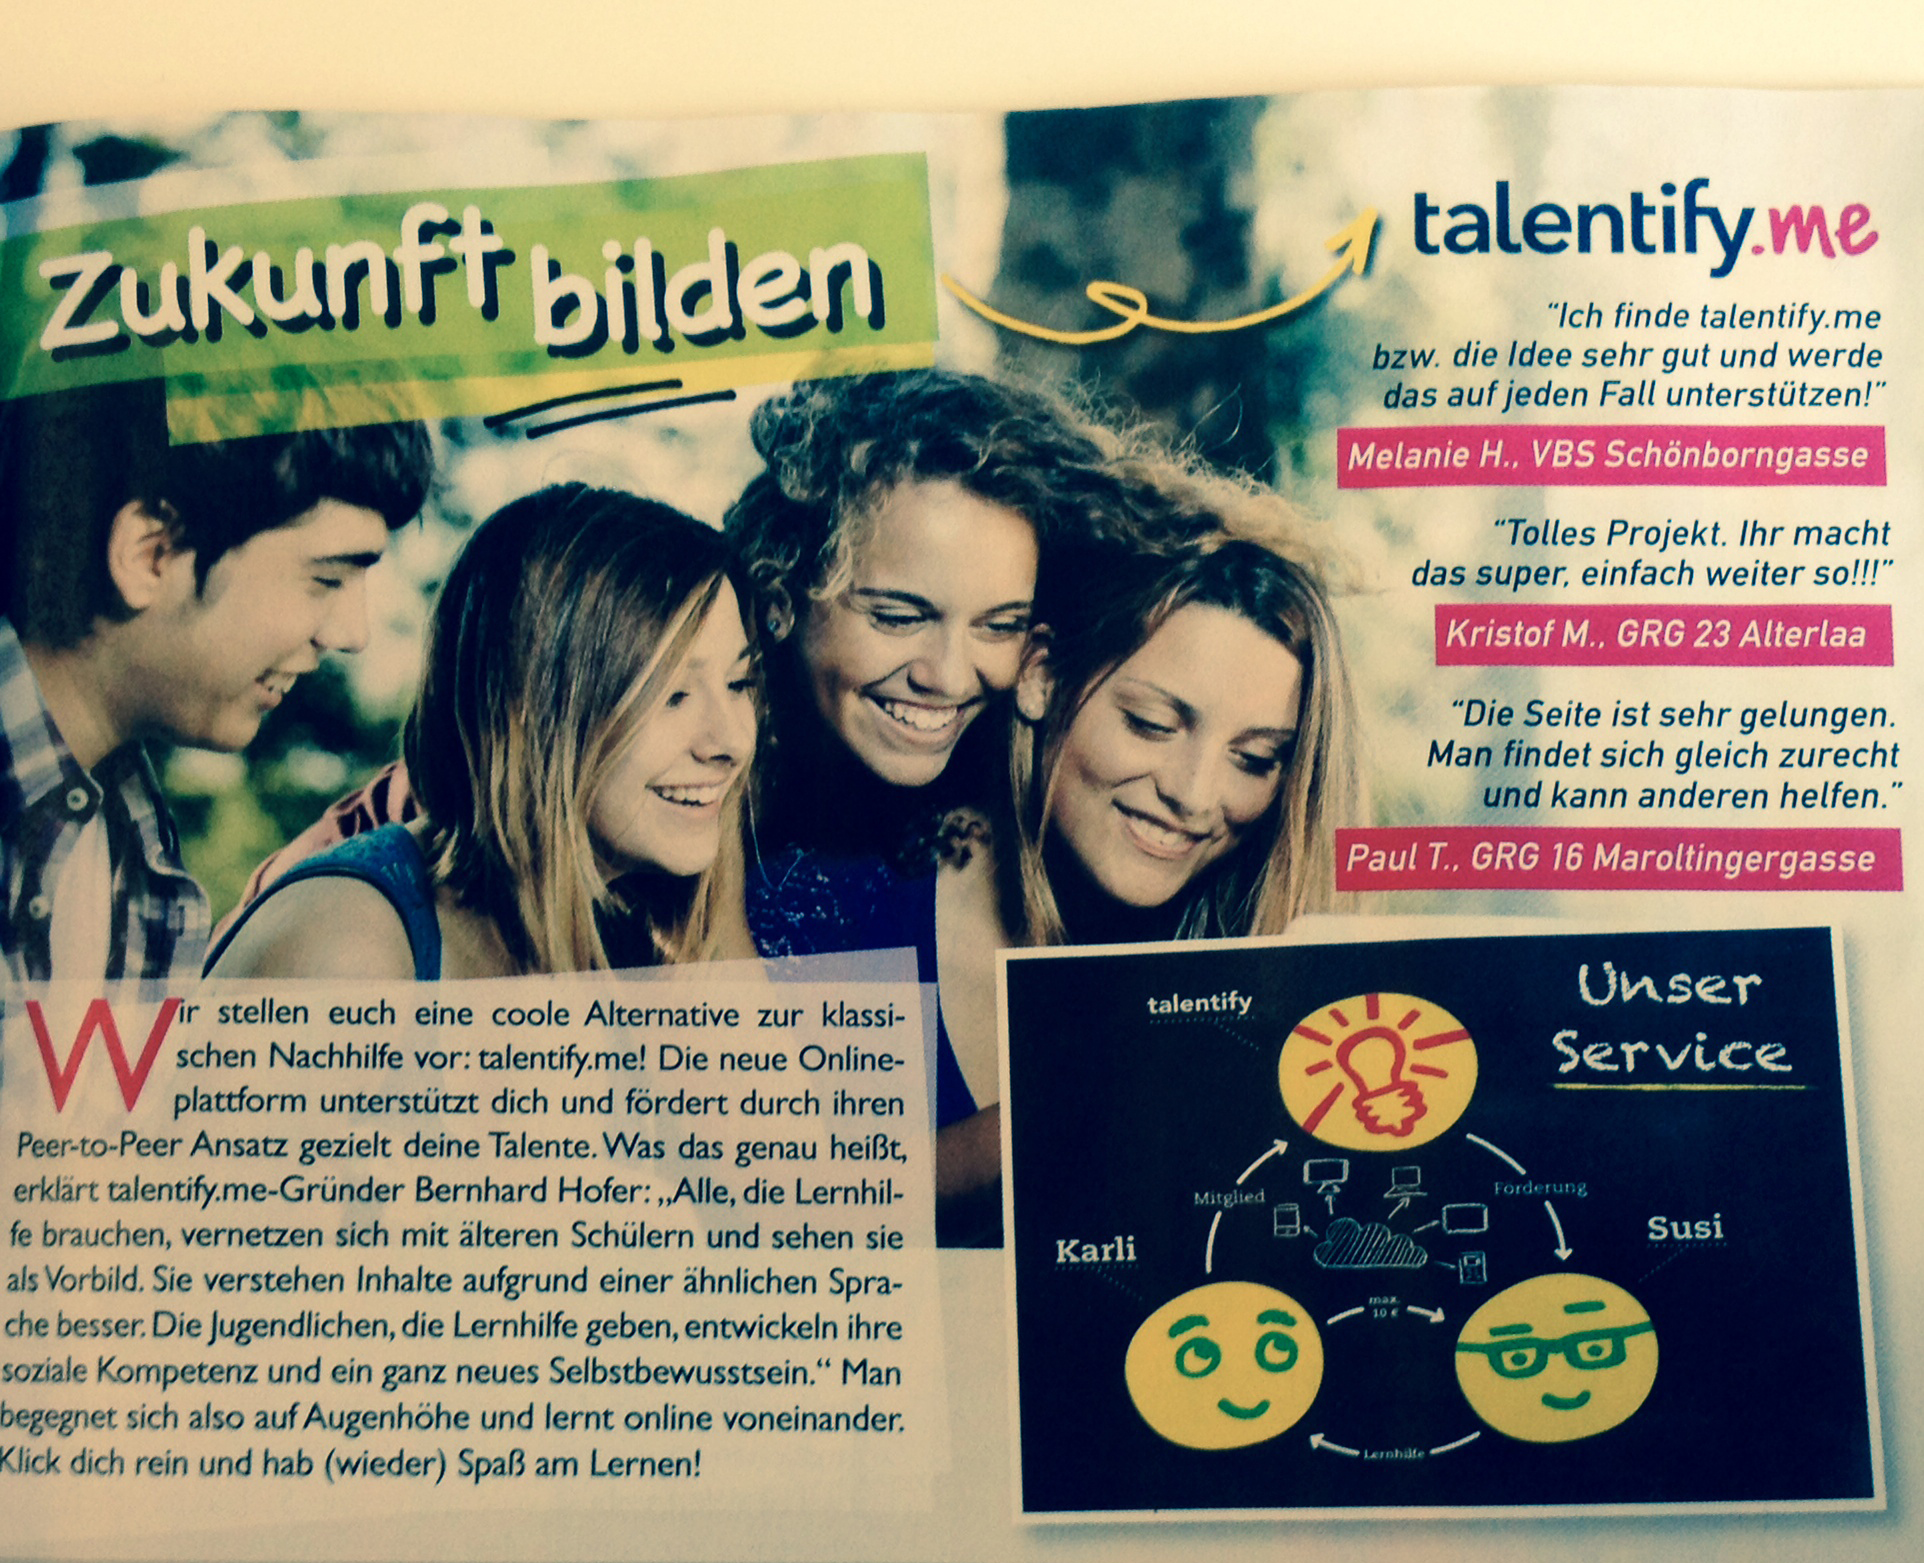 Cool Jugendmagazin: Zukunft bilden - talentify.me